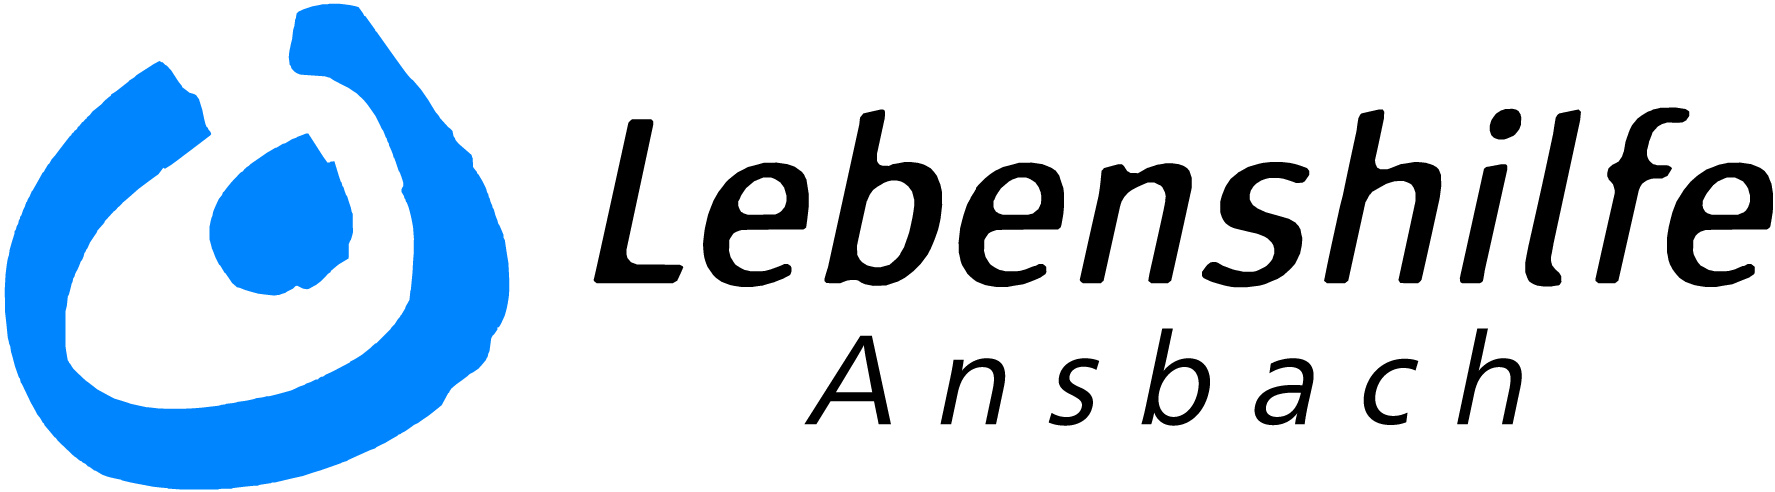 Lebenshilfe Ansbach Logo